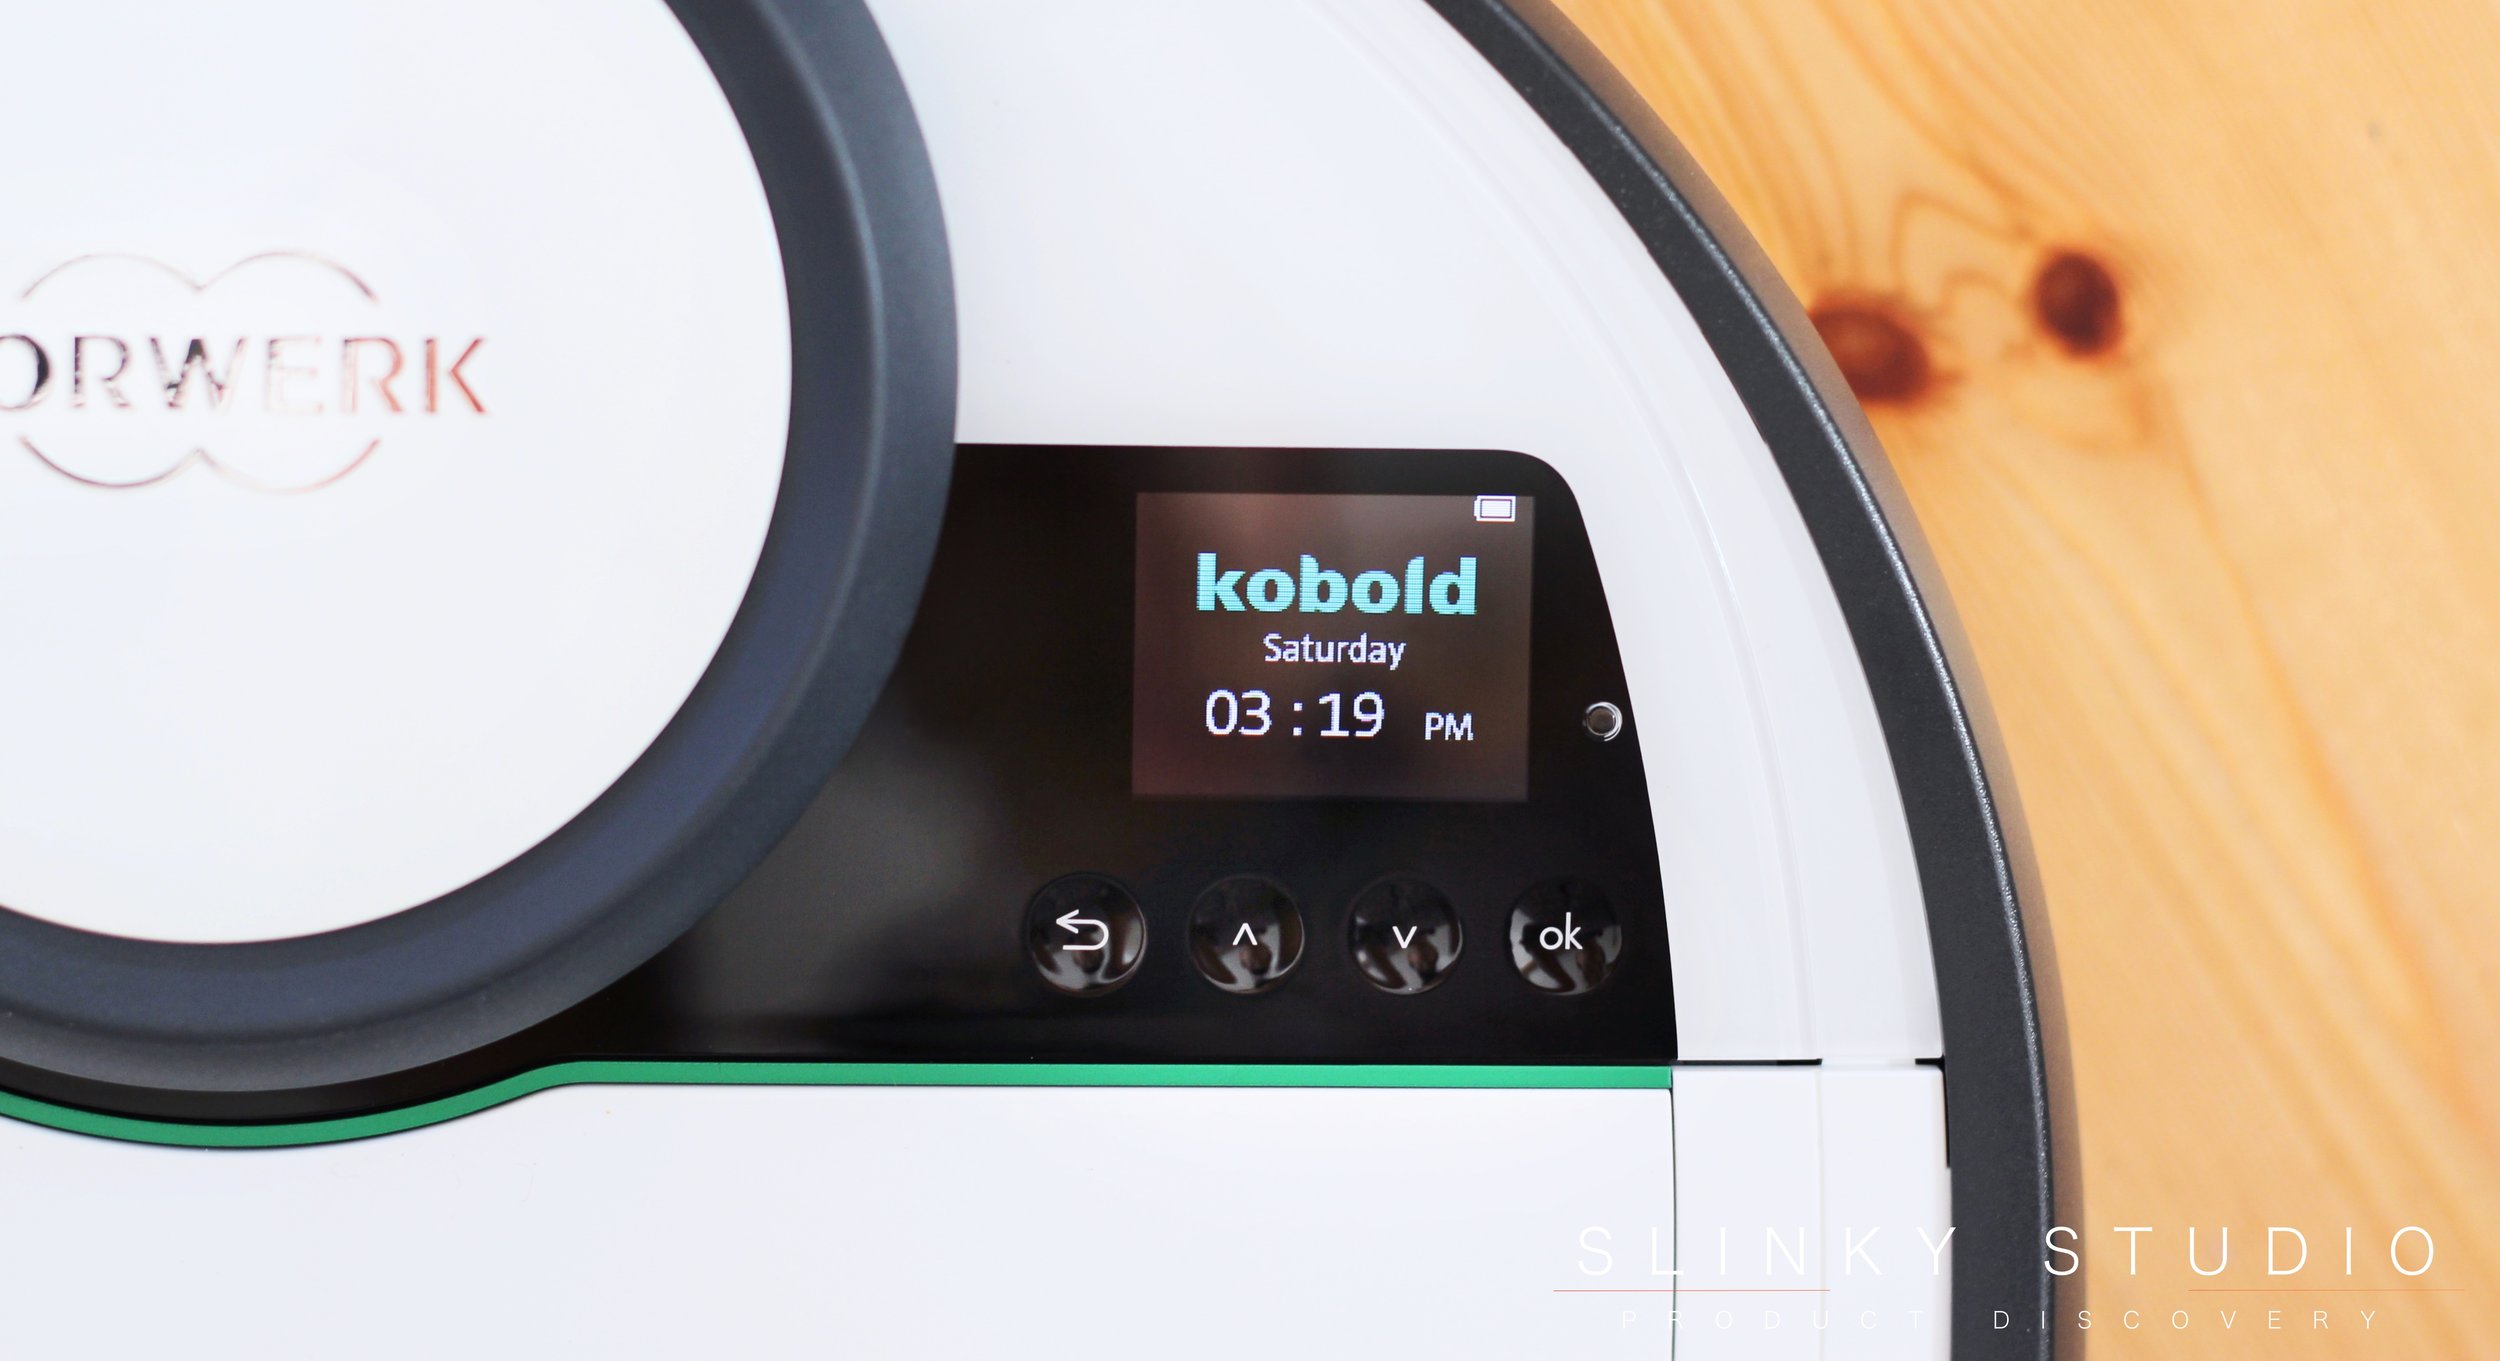 Vorwerk Kobold VR200 Robot Cleaner Contols Screen.jpg